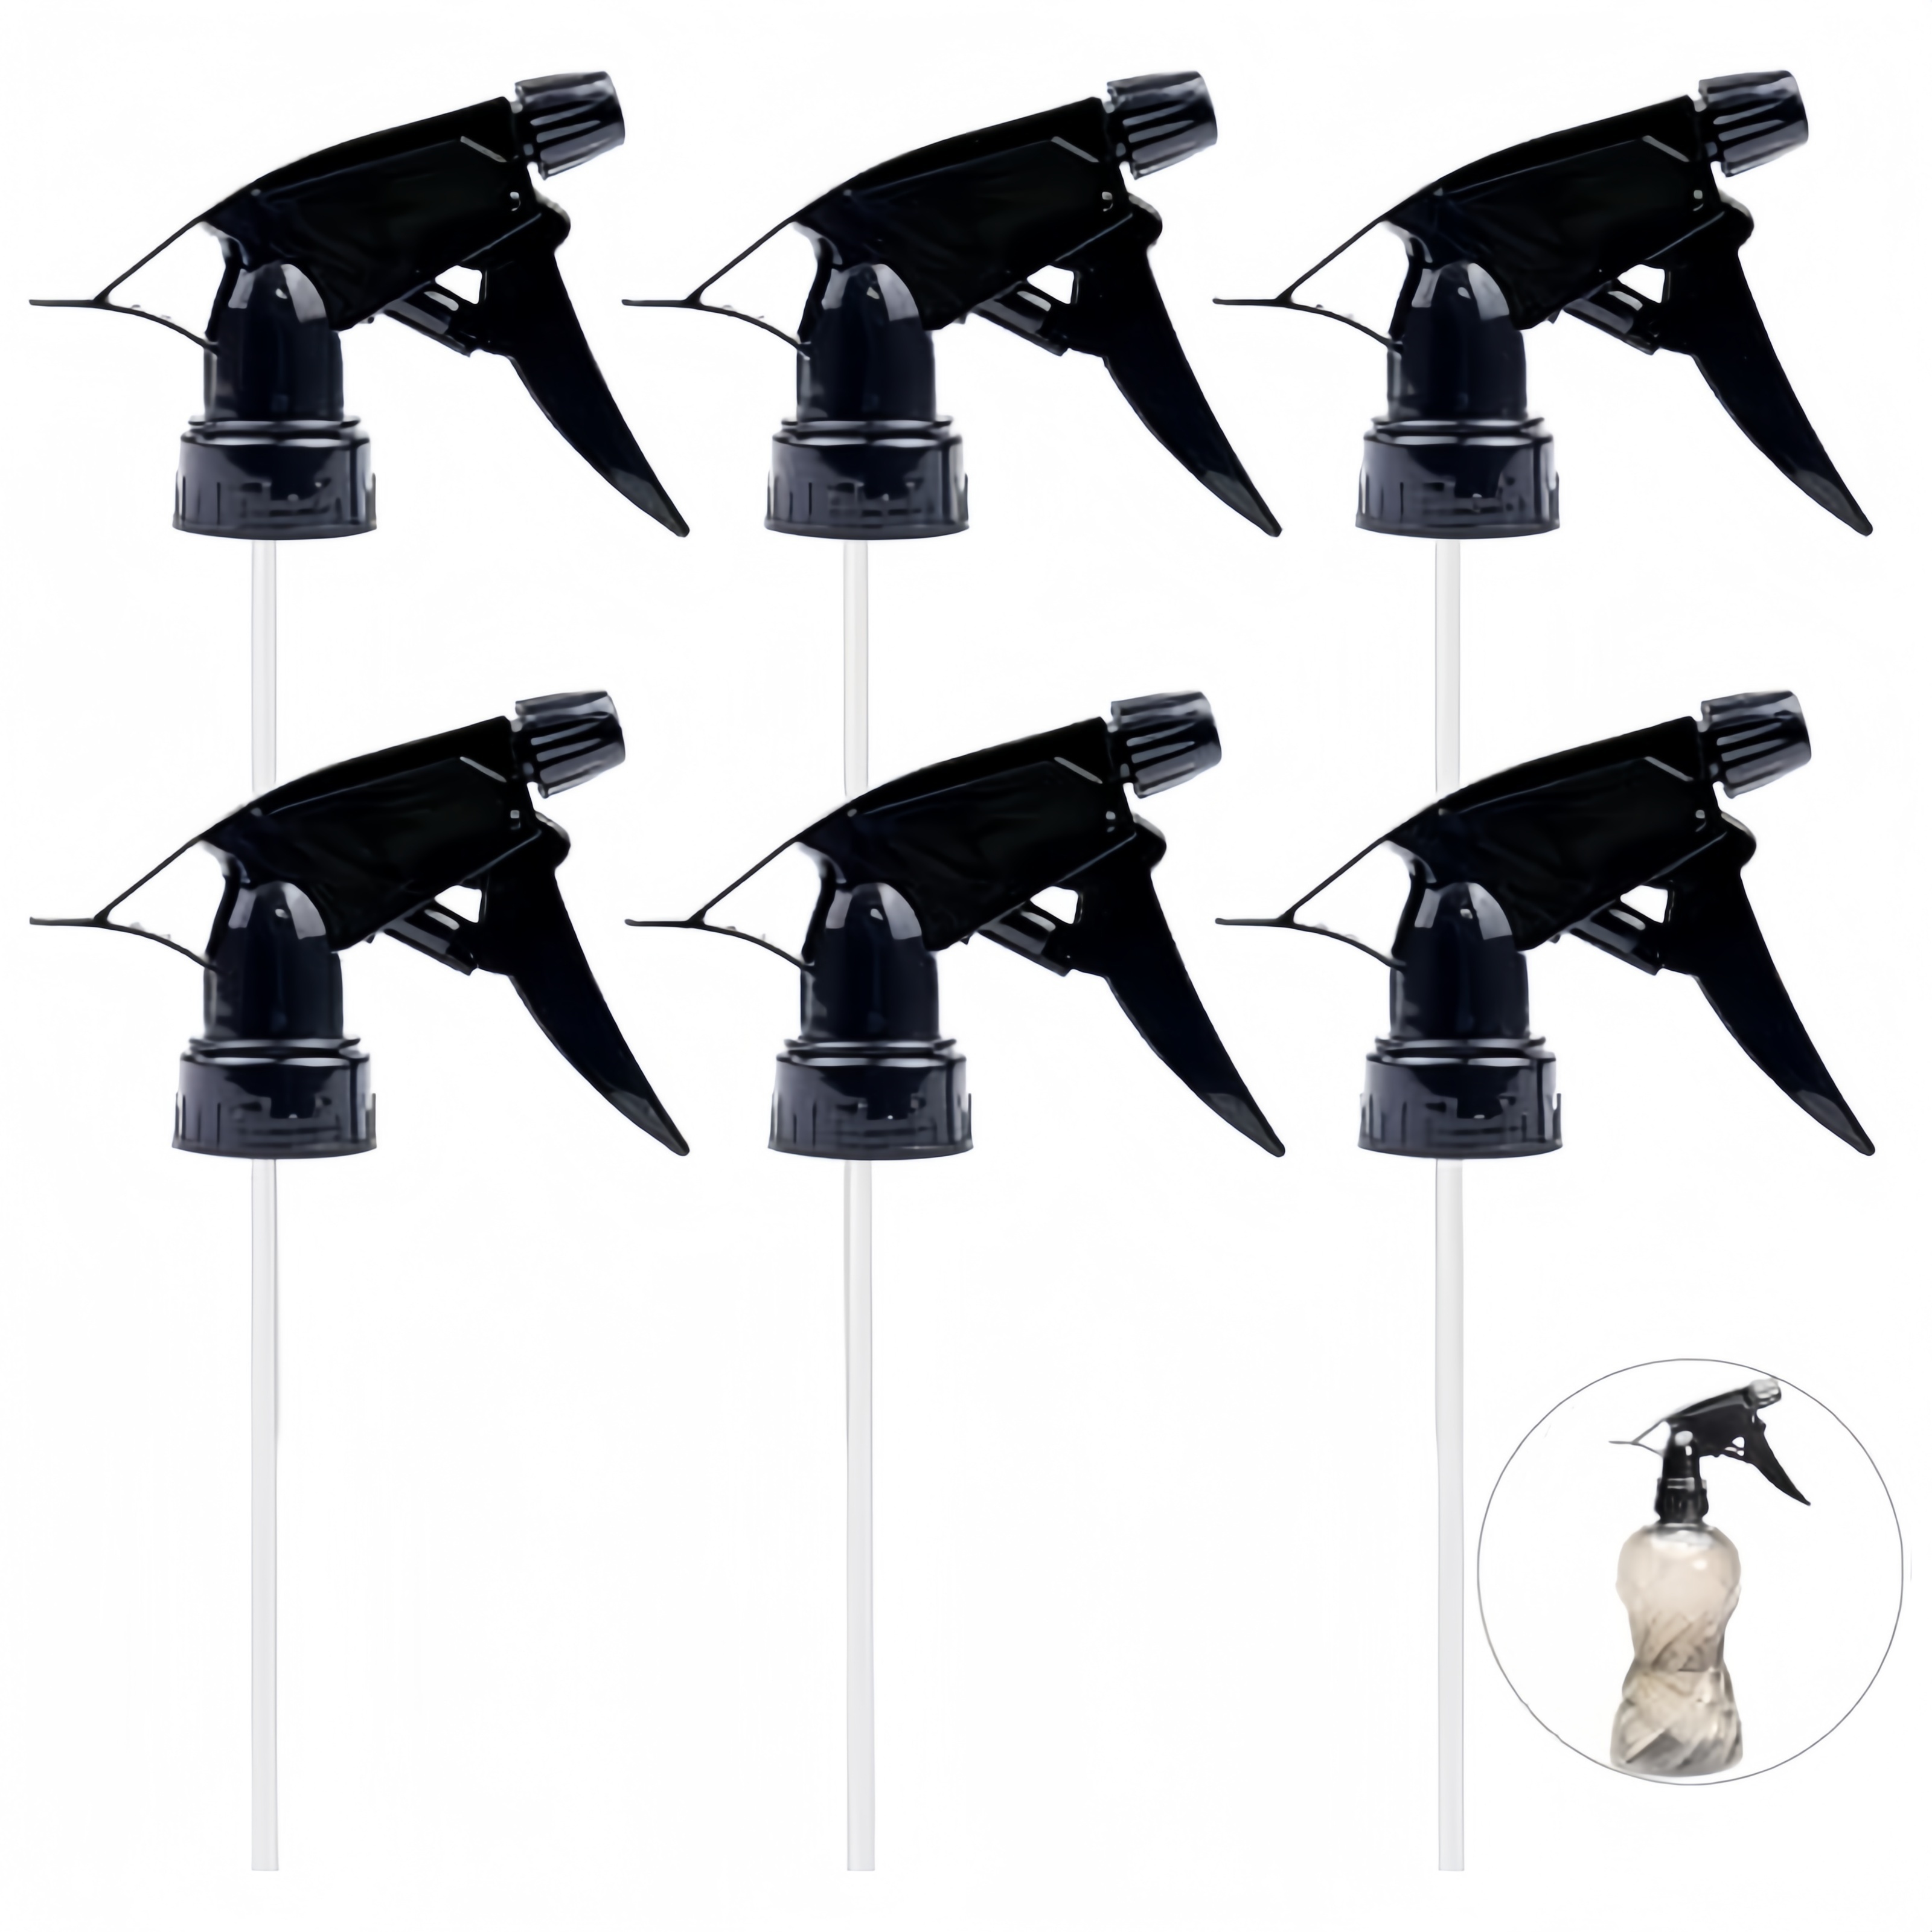 

6-pack Heavy Duty Mist & Stream Spray Bottle Nozzles - Reusable, Fits Standard 28/400 Neck Bottles For Home & Office Cleaning (black)